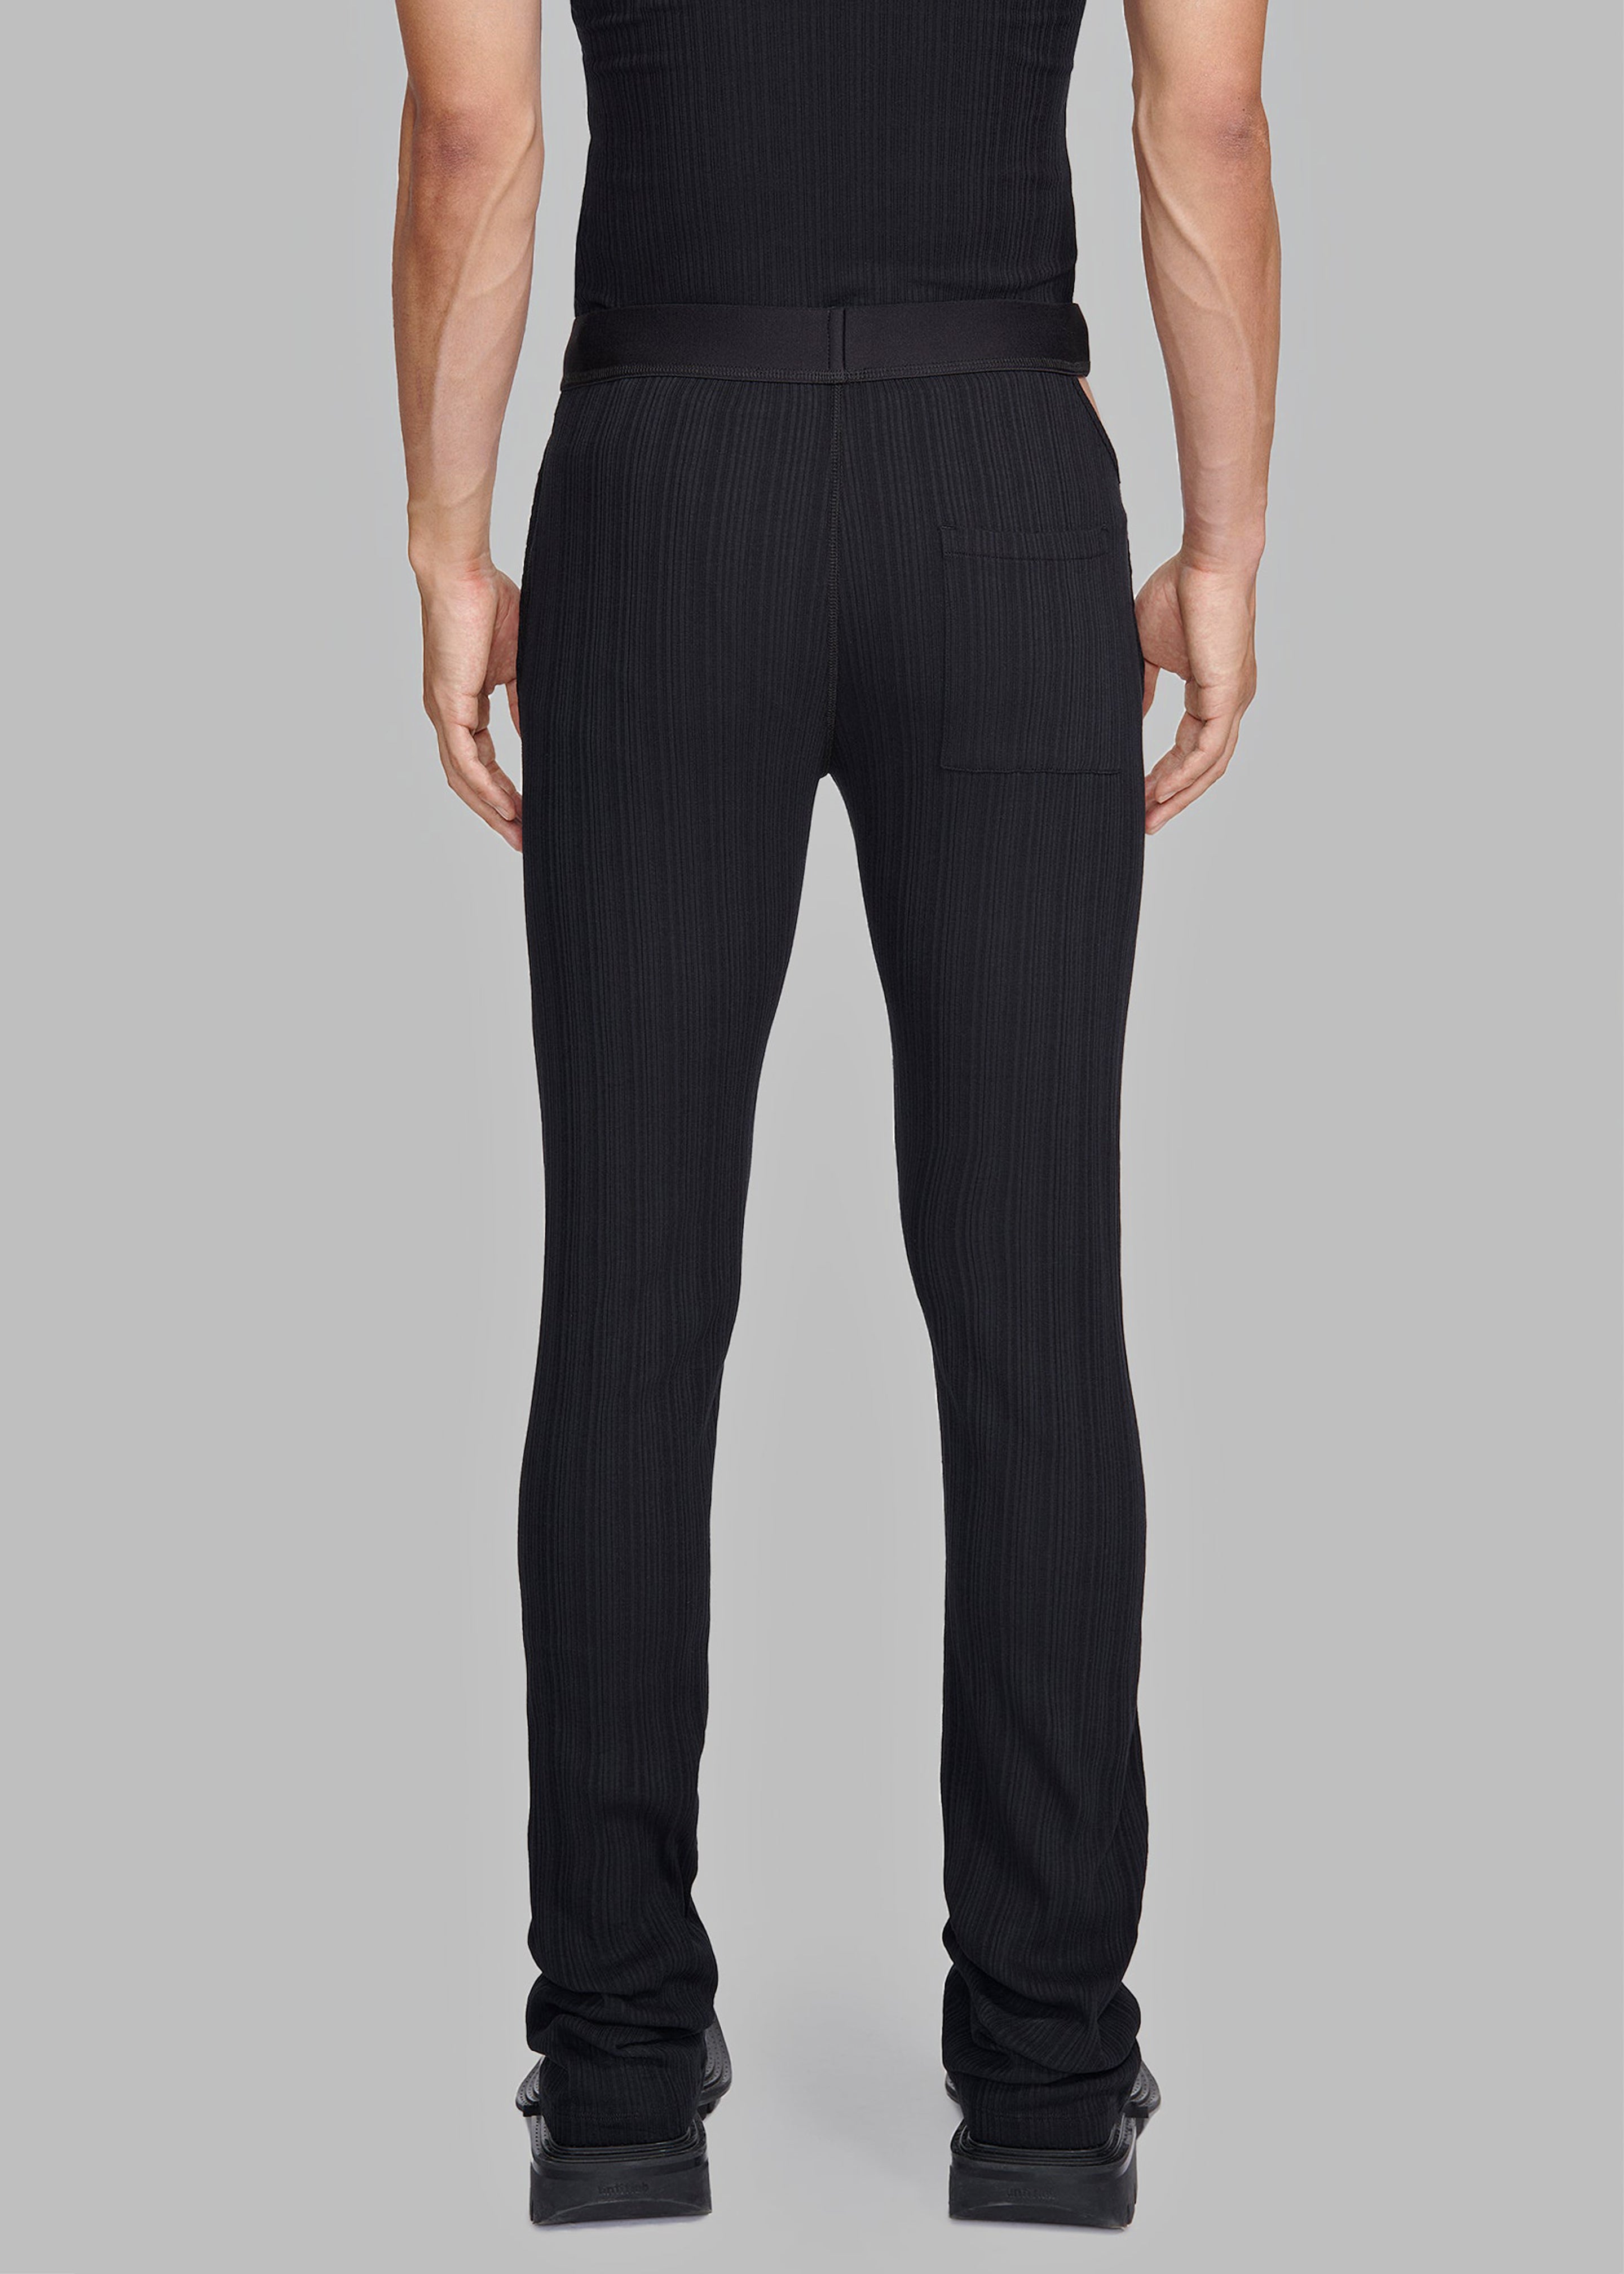 Louis Gabriel Nouchi Flared Loungewear Pants With Signature Opening - Black - 4